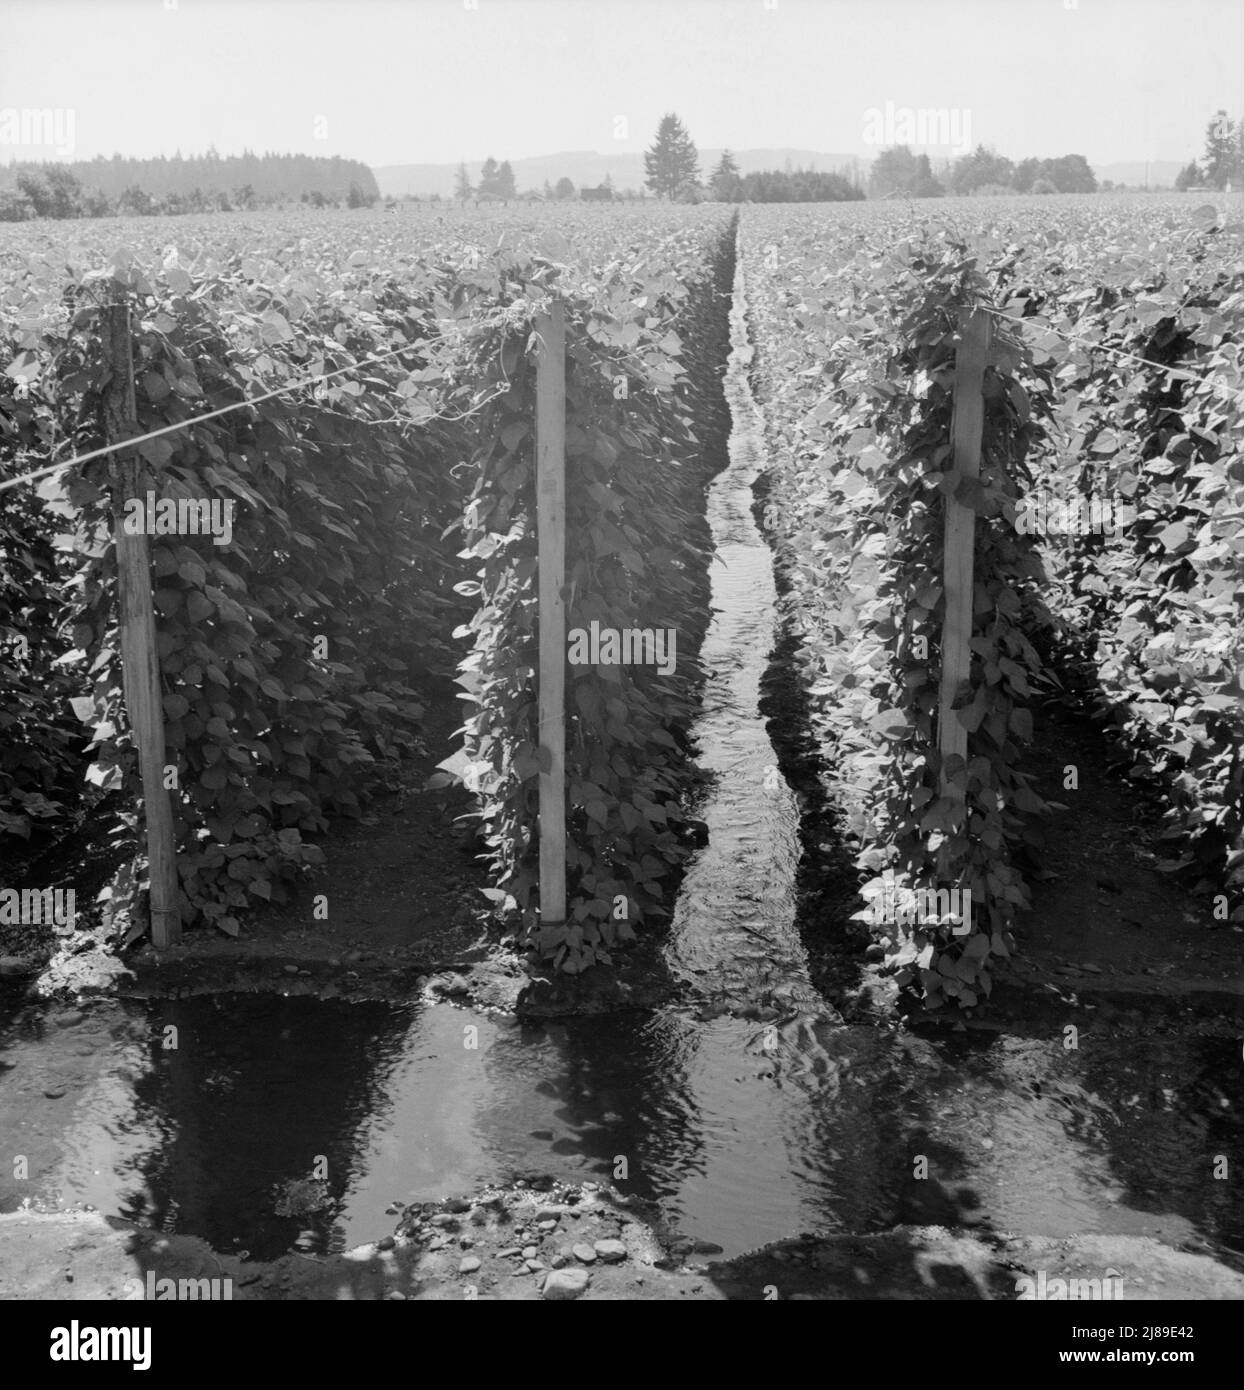 Oregon, Marion County, near West Stayton. Beanfield showing irrigation. Stock Photo